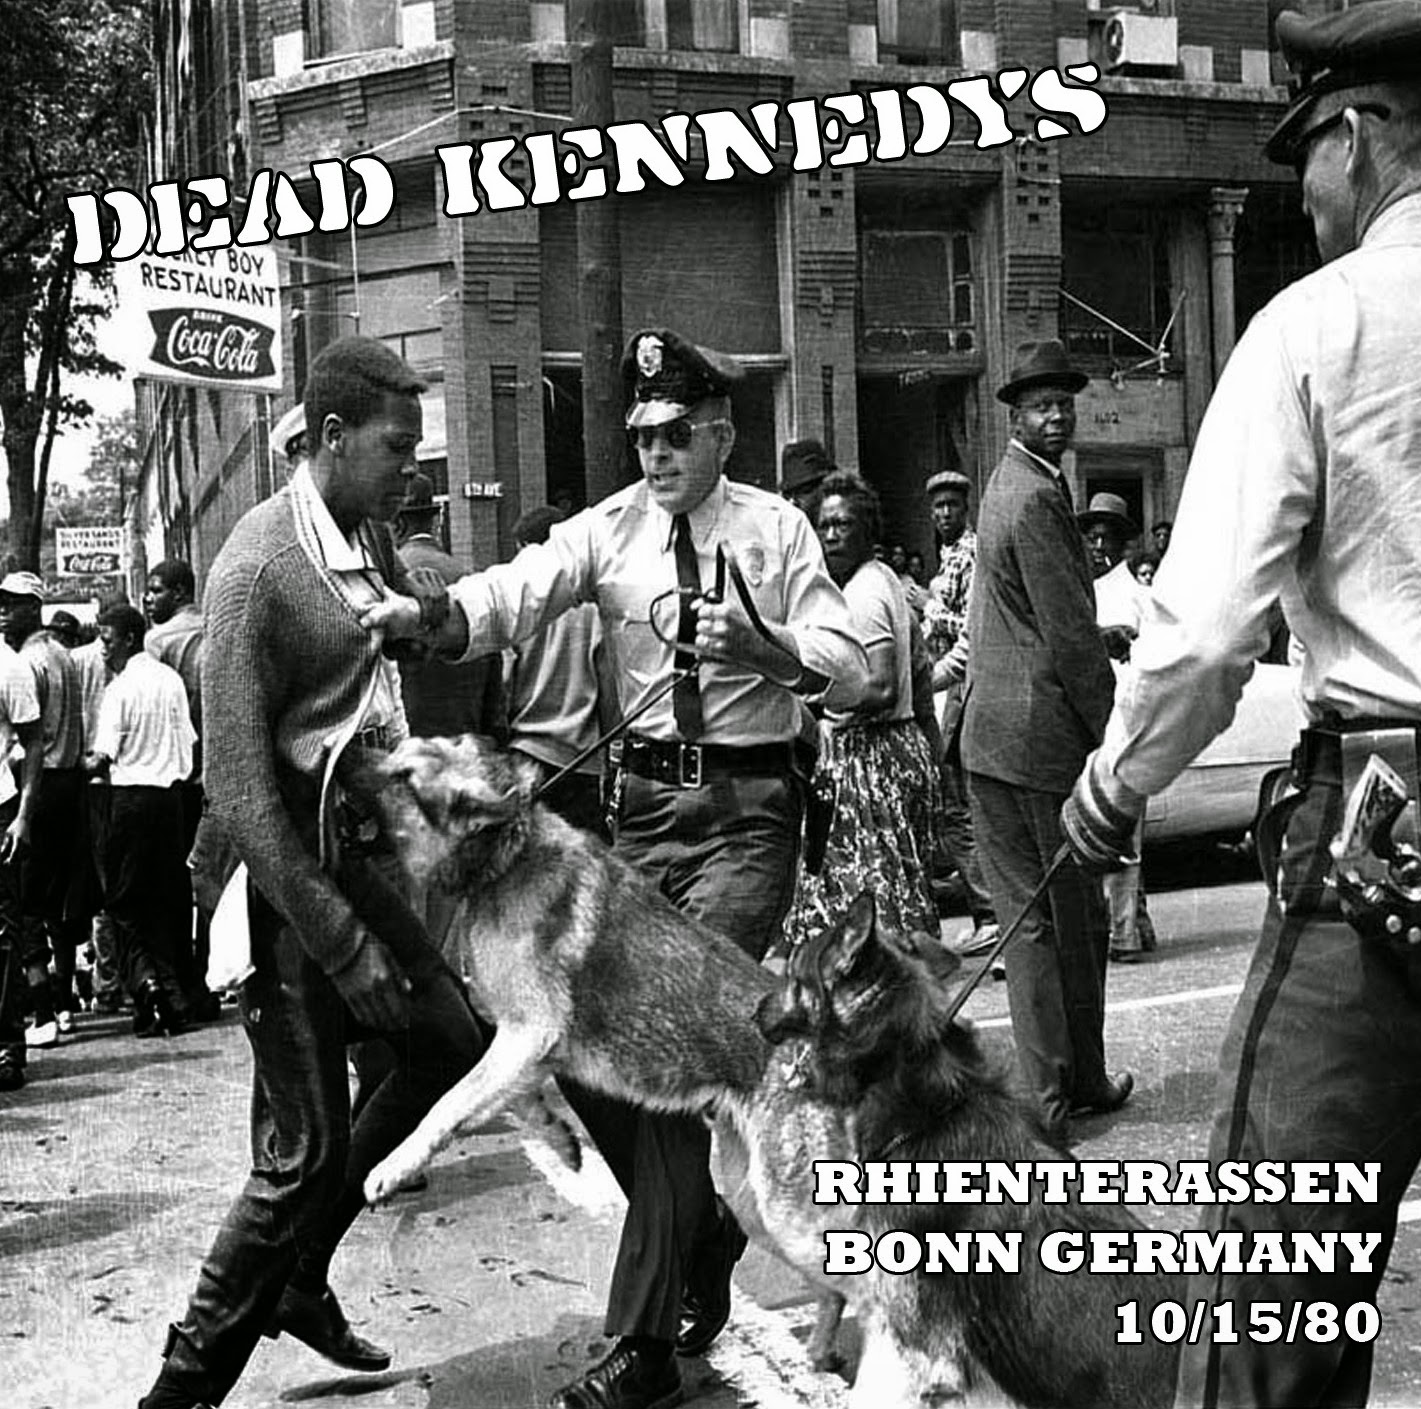 Best dead kennedys album